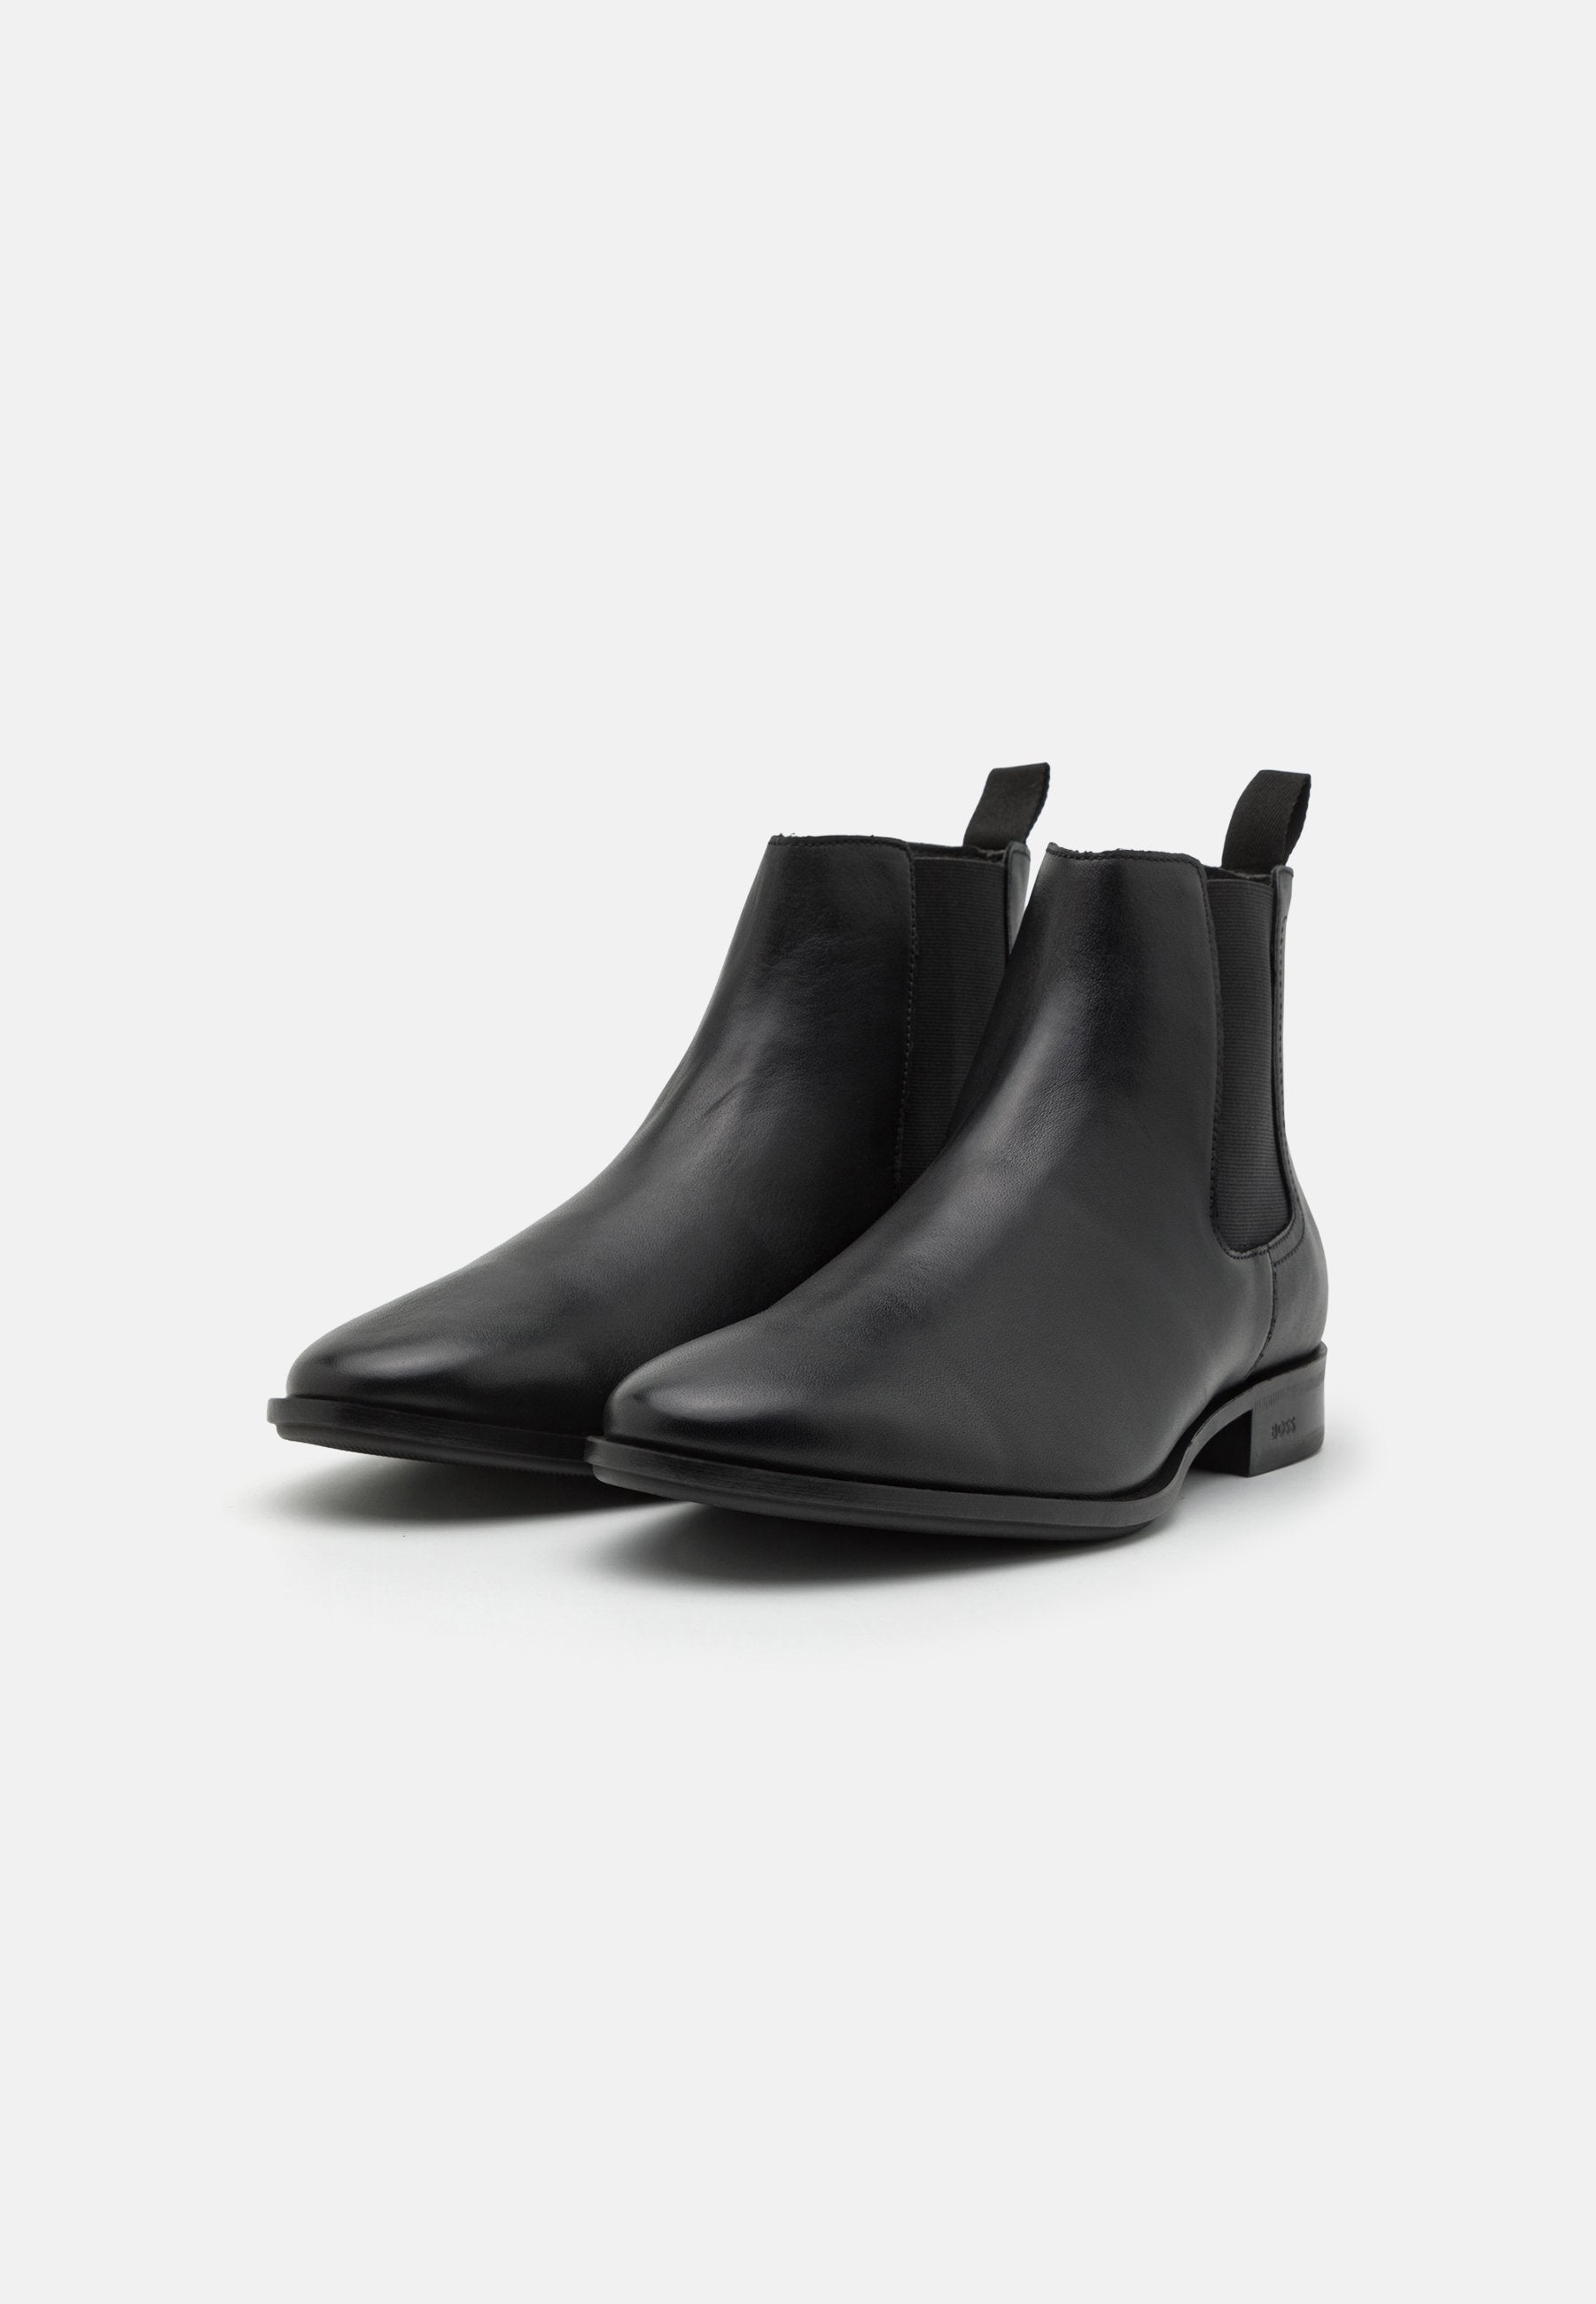 Hugo Boss Colby Chelsea Boot in Black – - Fashion for Men and Women